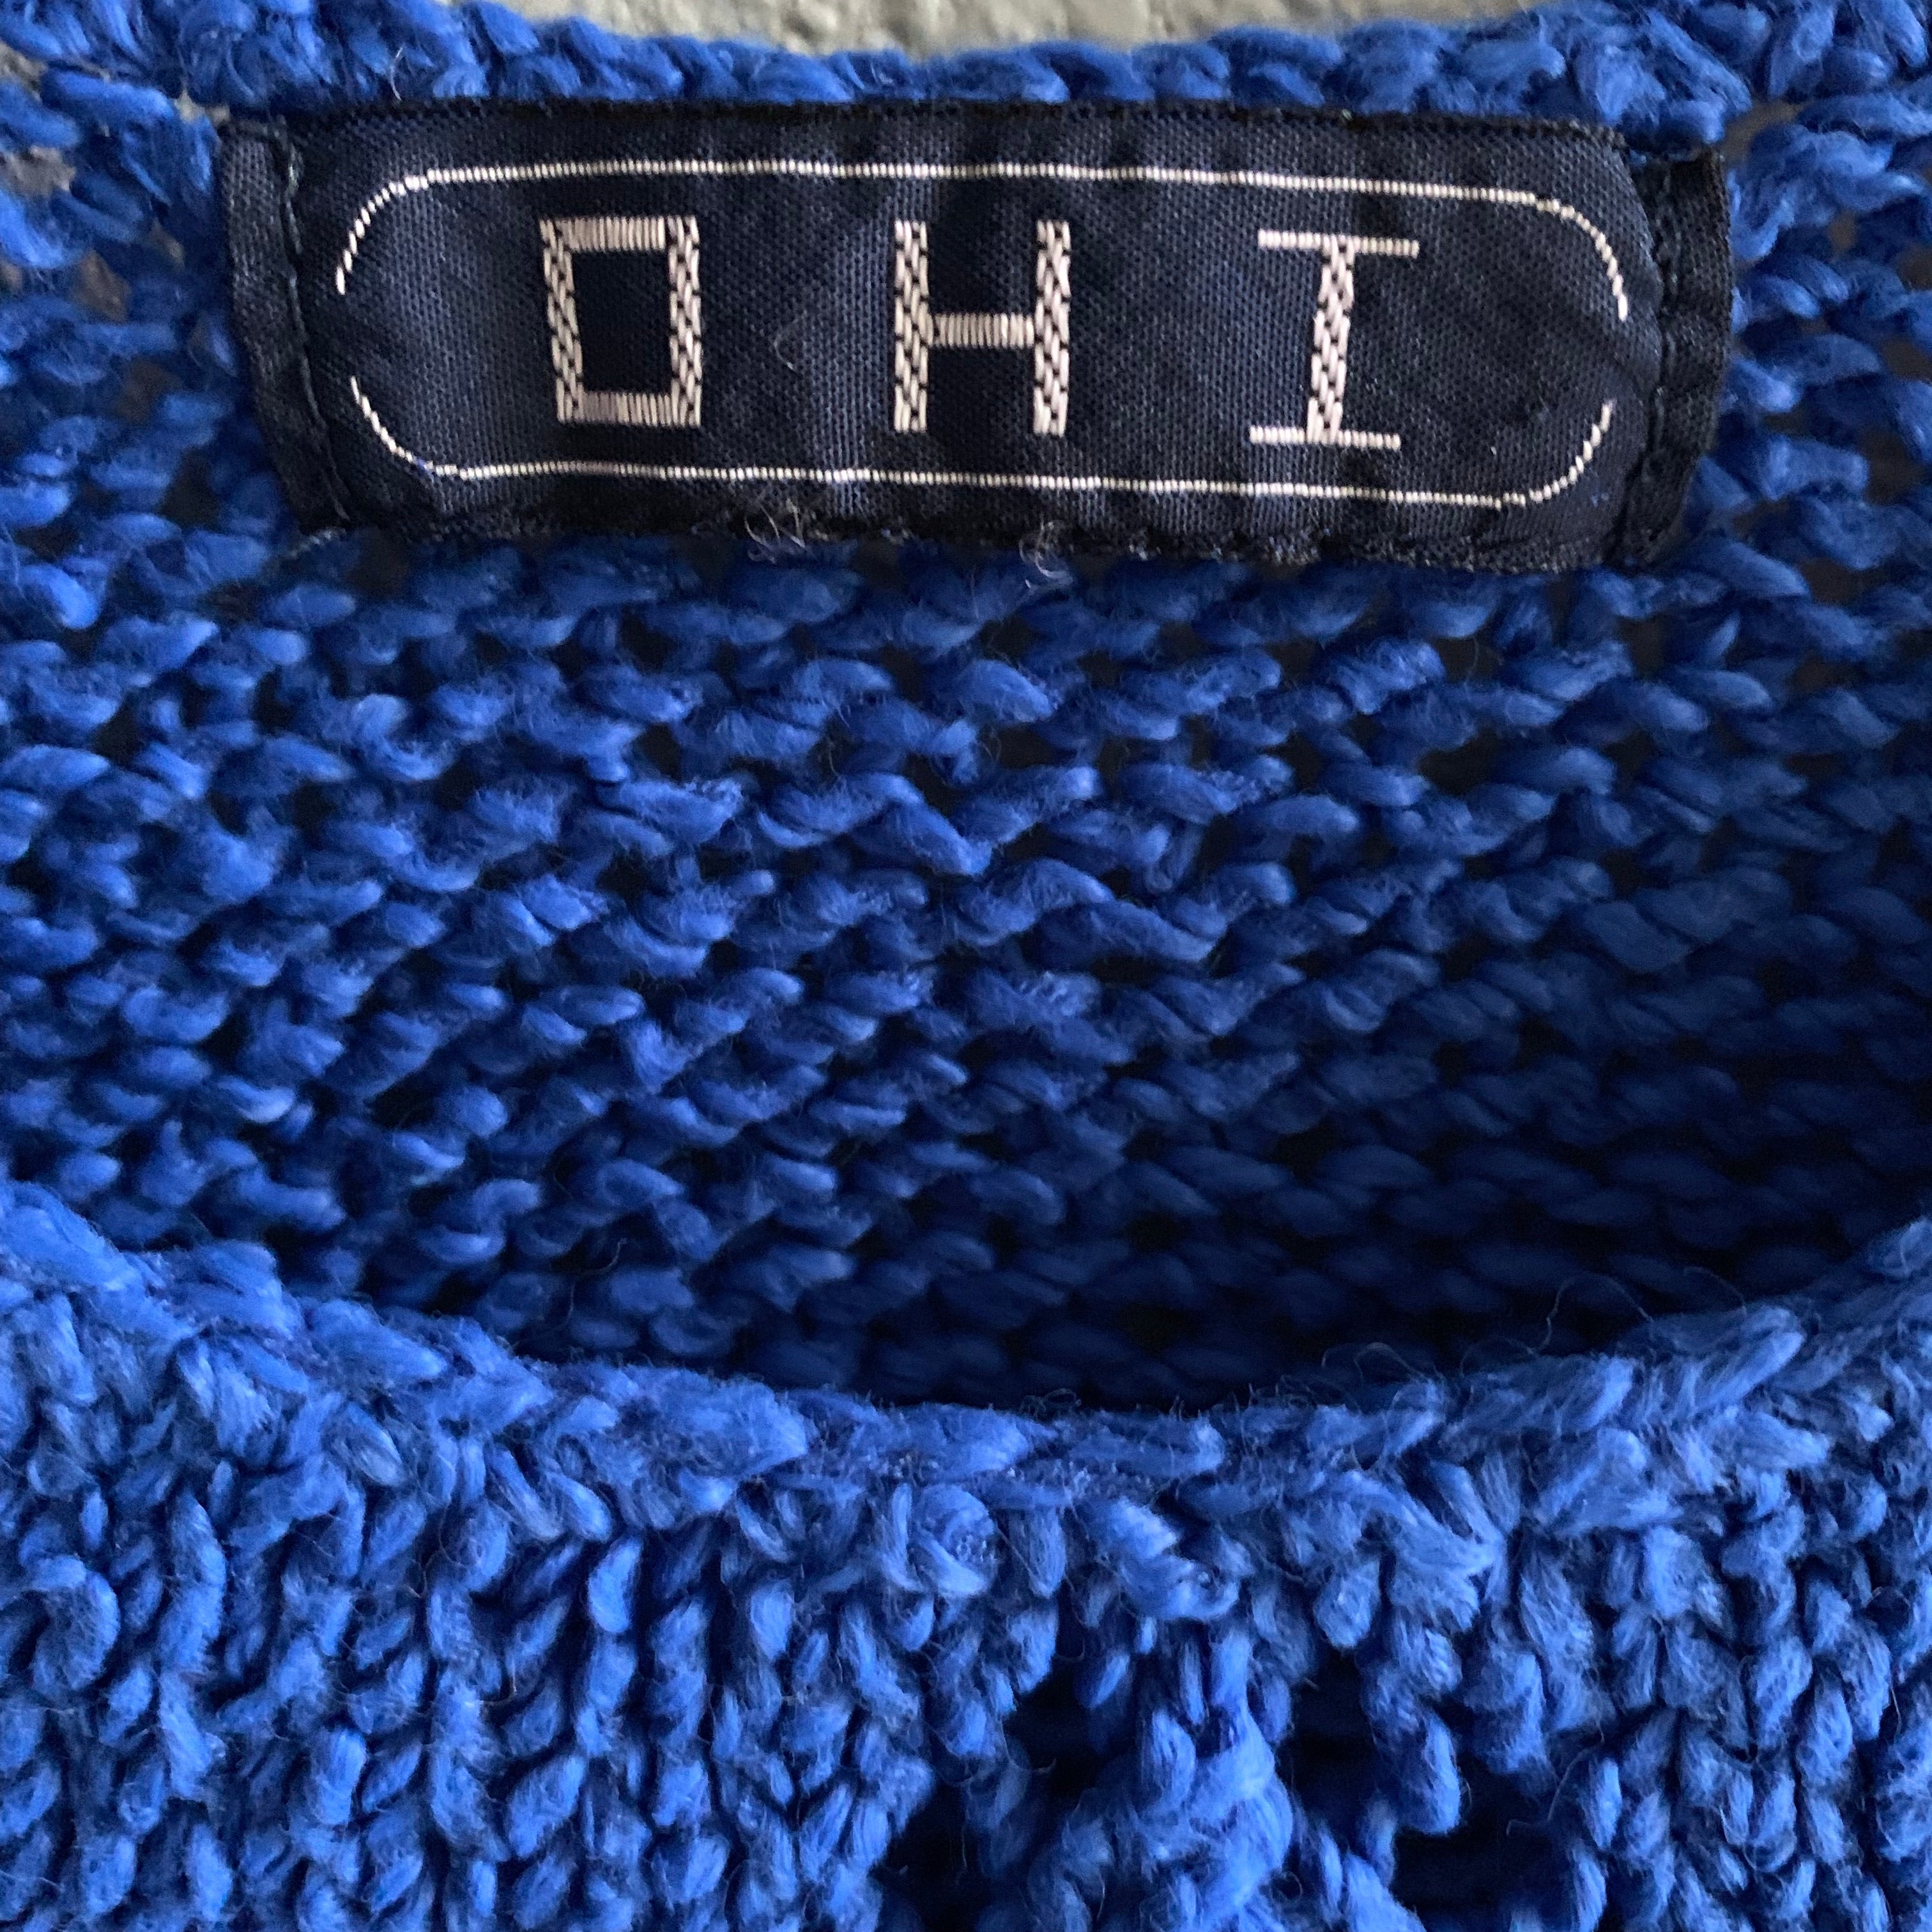 Blue Sweater Top